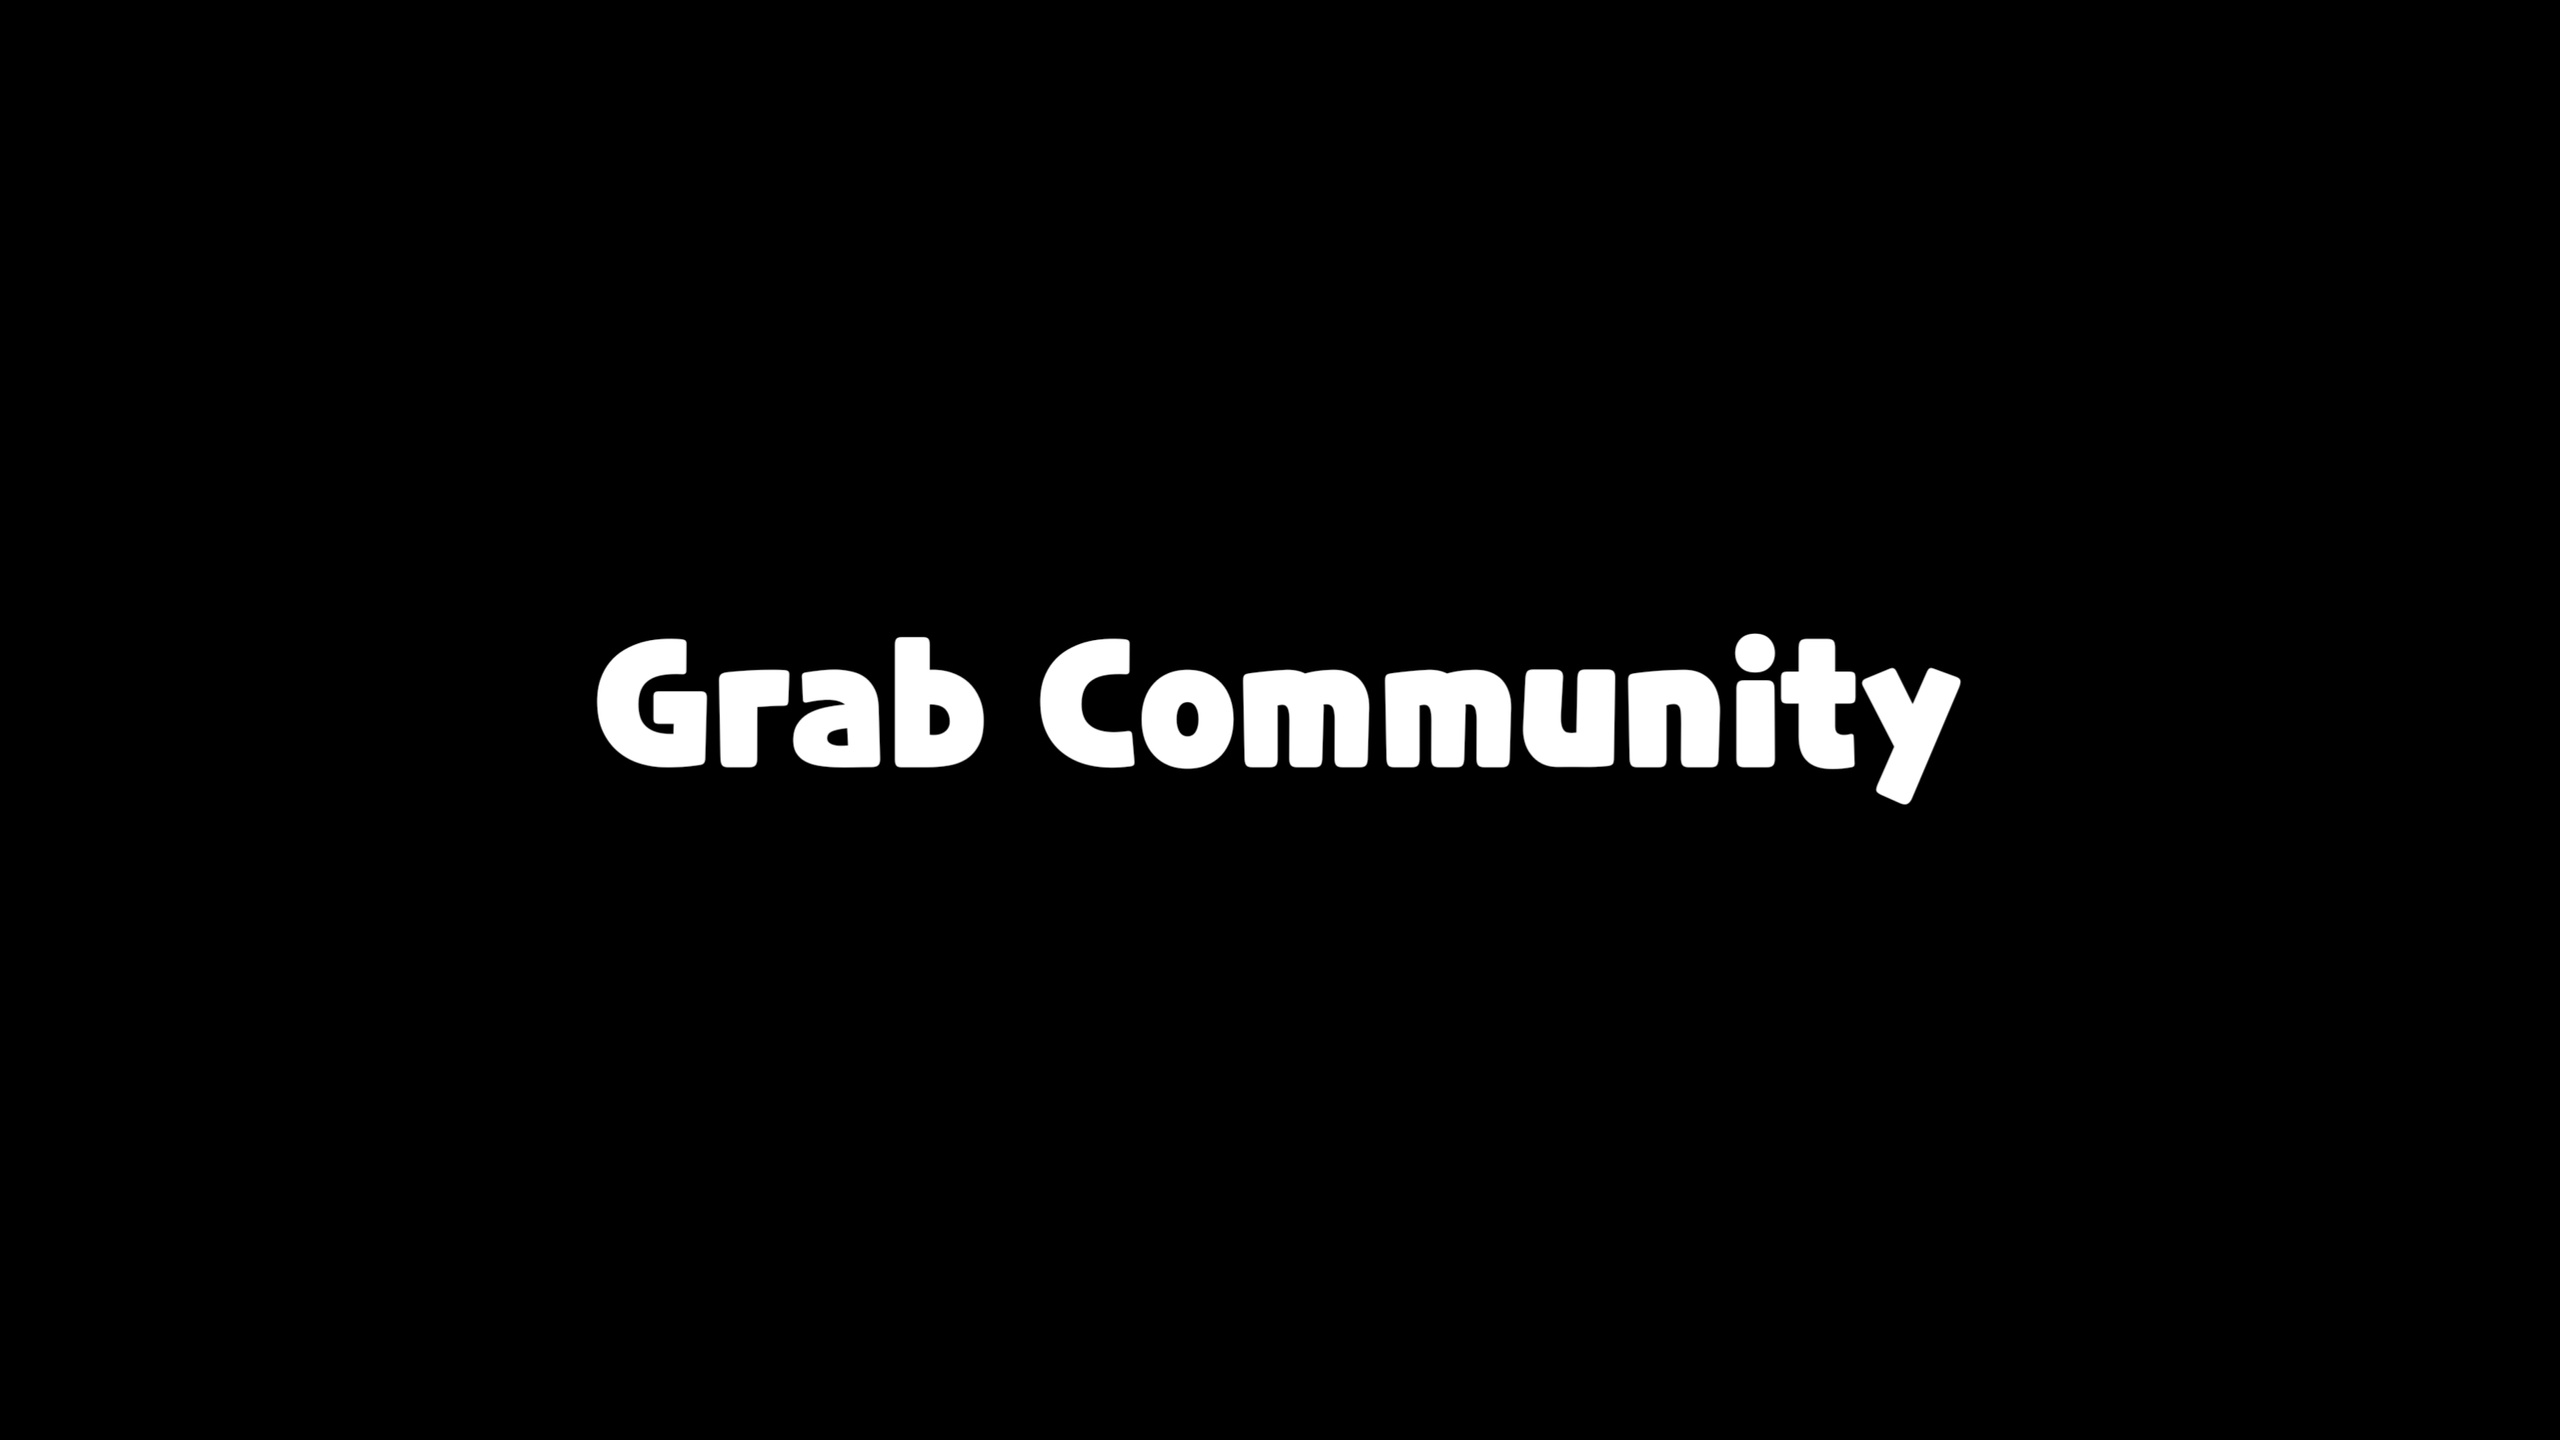 GRAB COMMUNITY